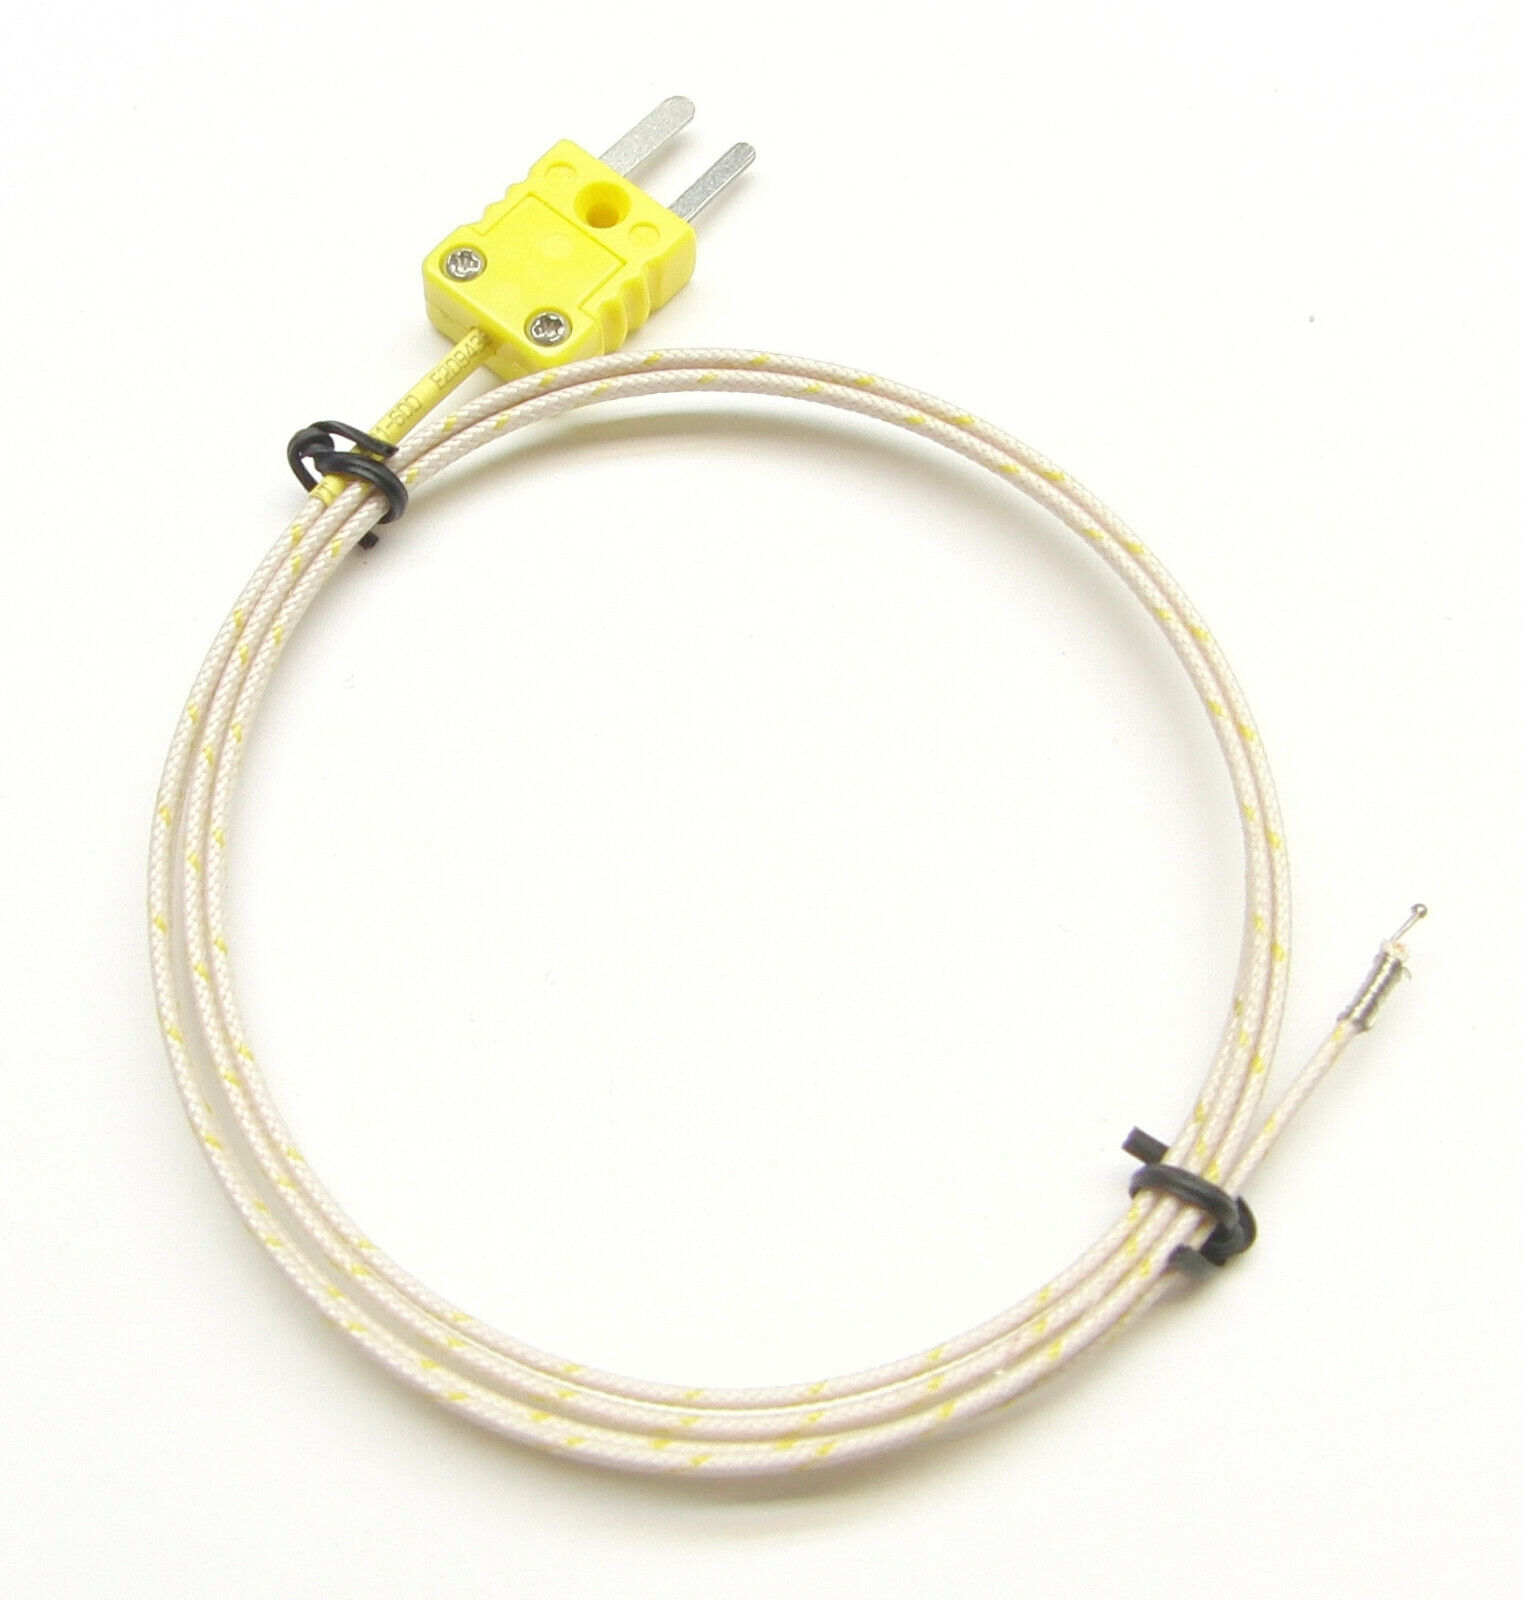 K-Type Thermocouple Wire Sensor for Digital Thermometer Probe Fiberglass PK-400